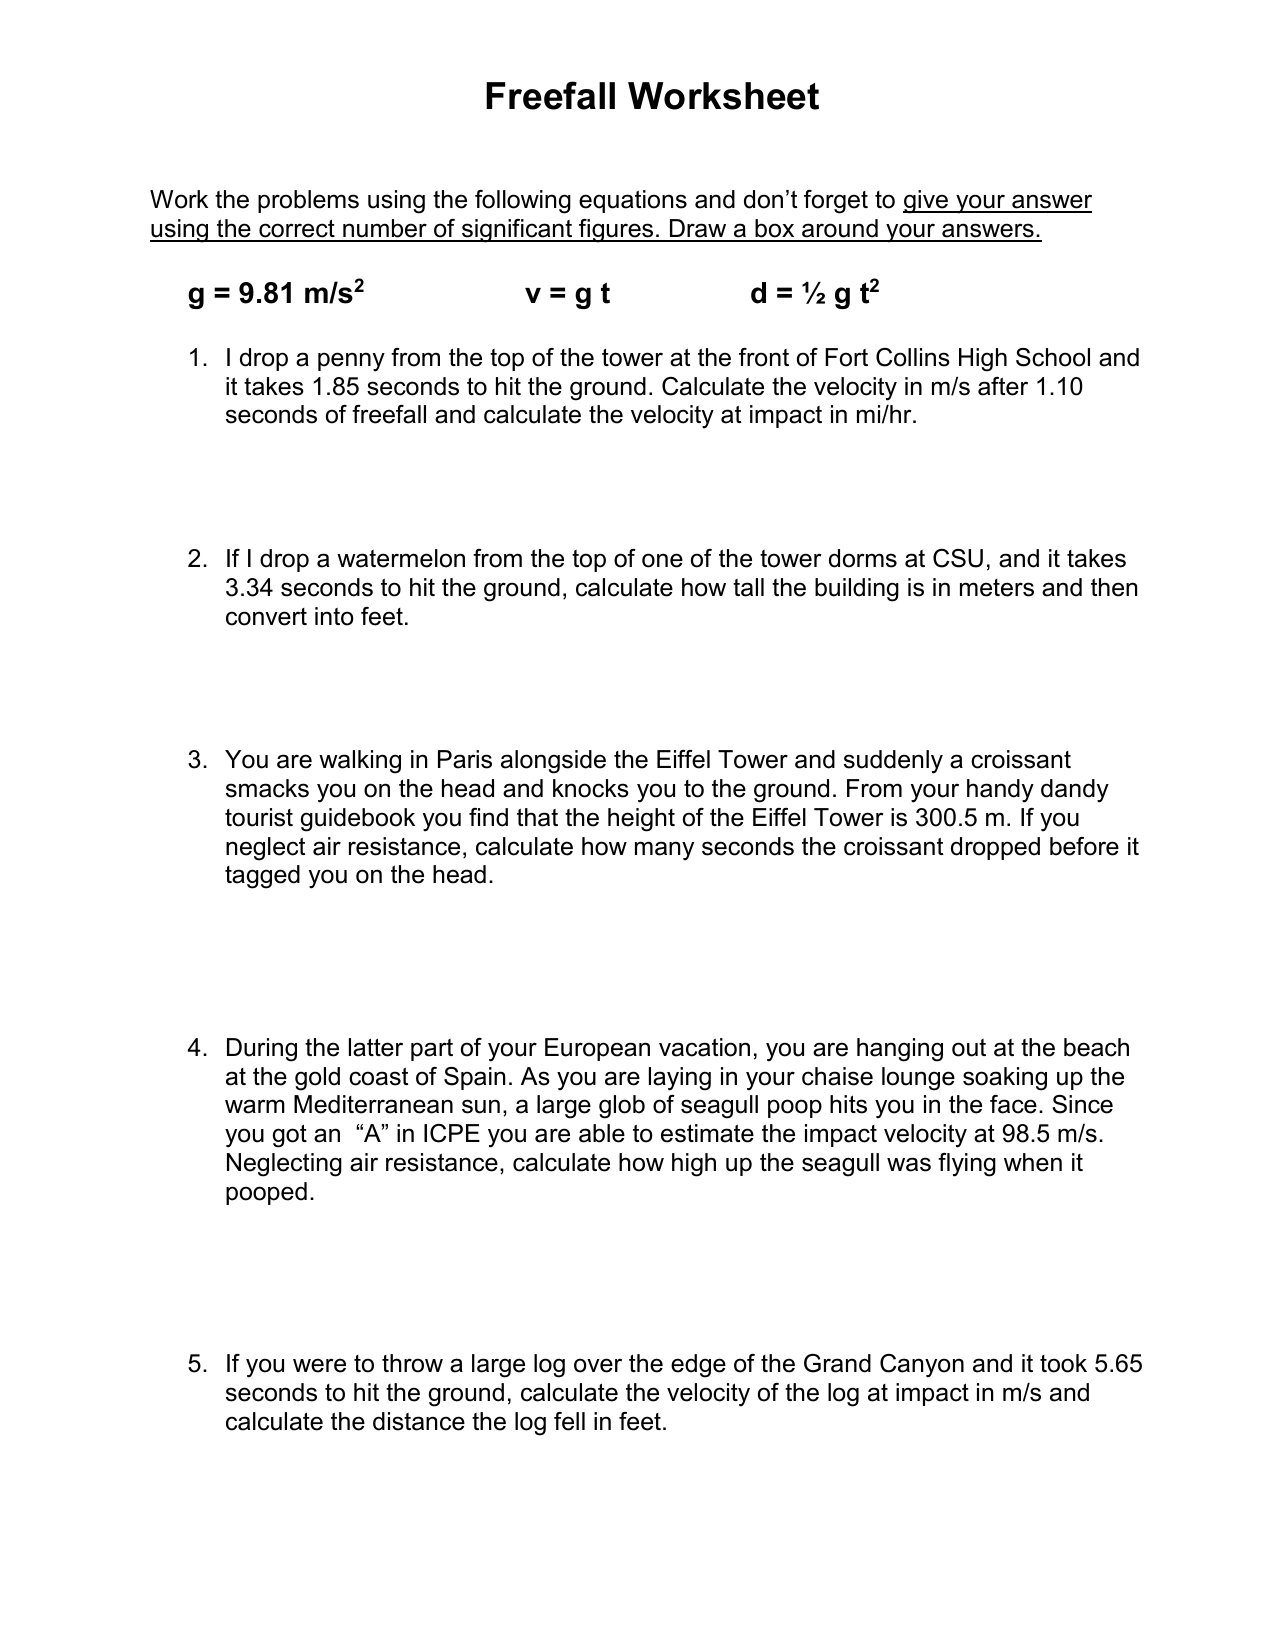 Freefall Worksheet (20) Inside Free Fall Problems Worksheet